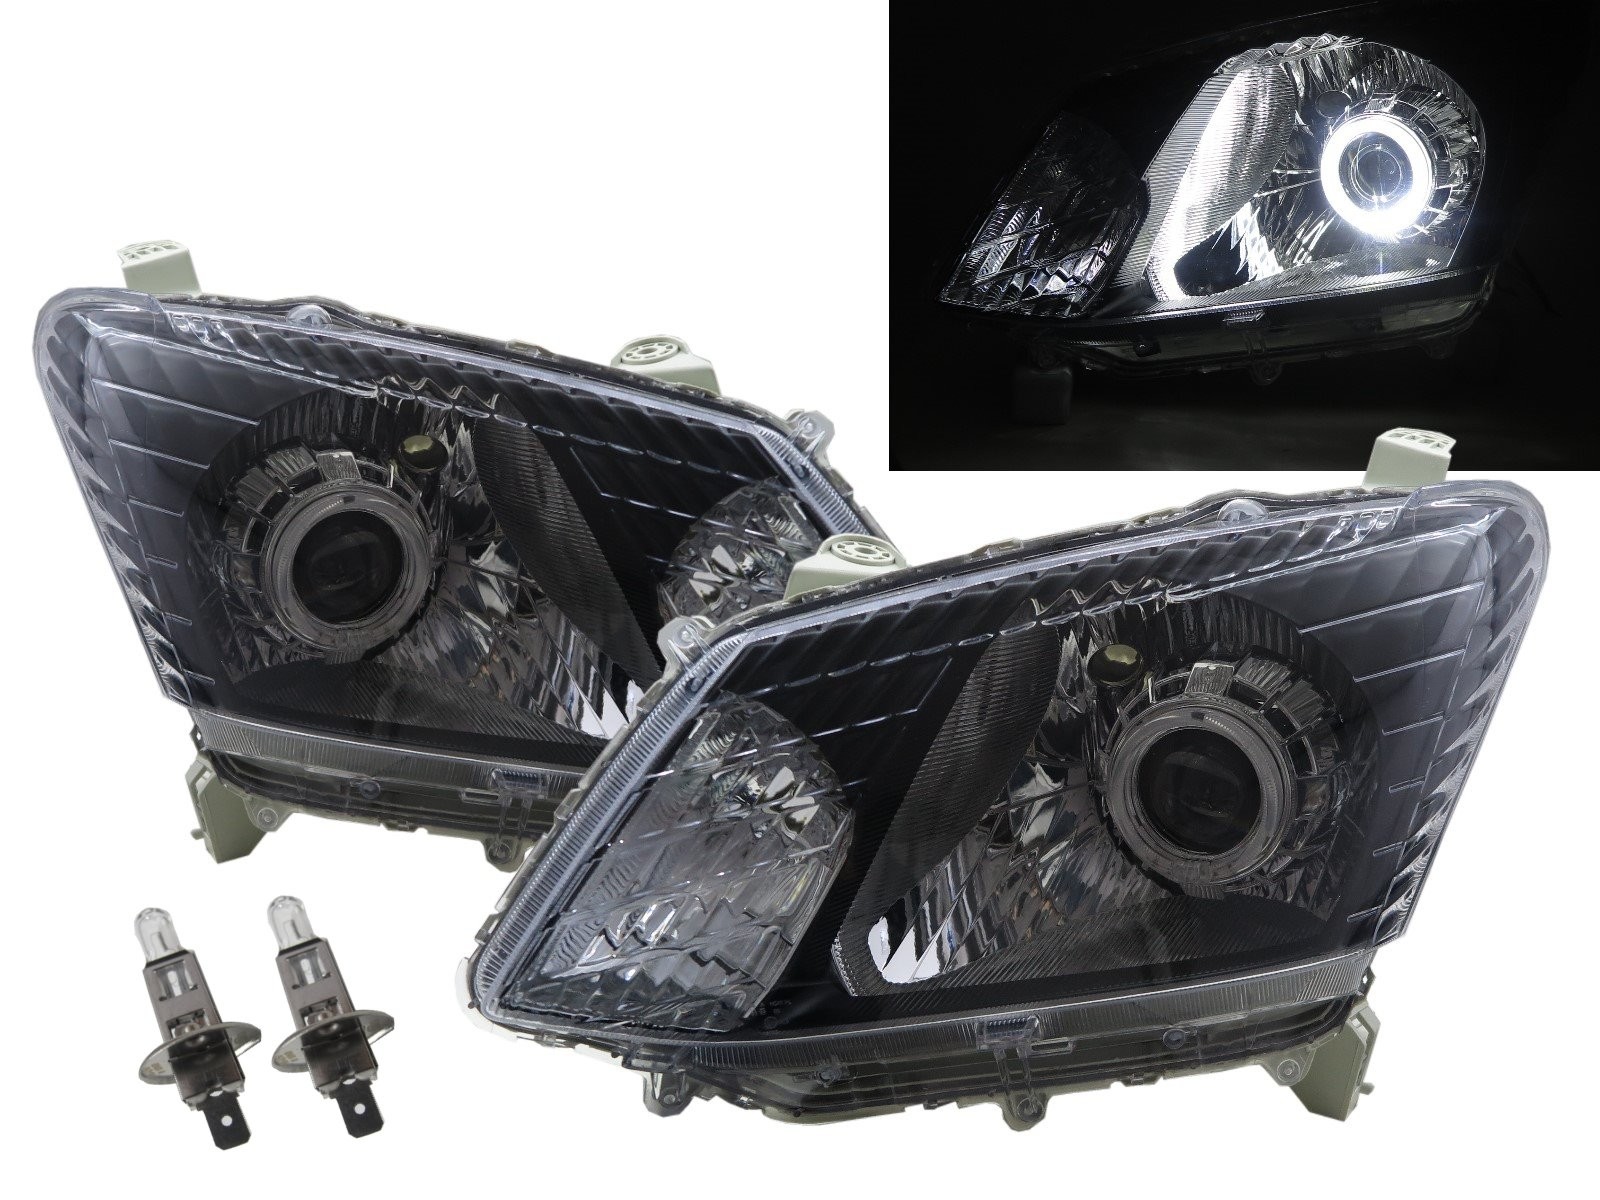 CrazyTheGod D-Max RT50 Second generation 2012-2015 Pre-Facelift Pickup Truck/Ute/Bakkie 2D/4D Guide LED Angel-Eye Projector Headlight Headlamp Black for ISUZU RHD